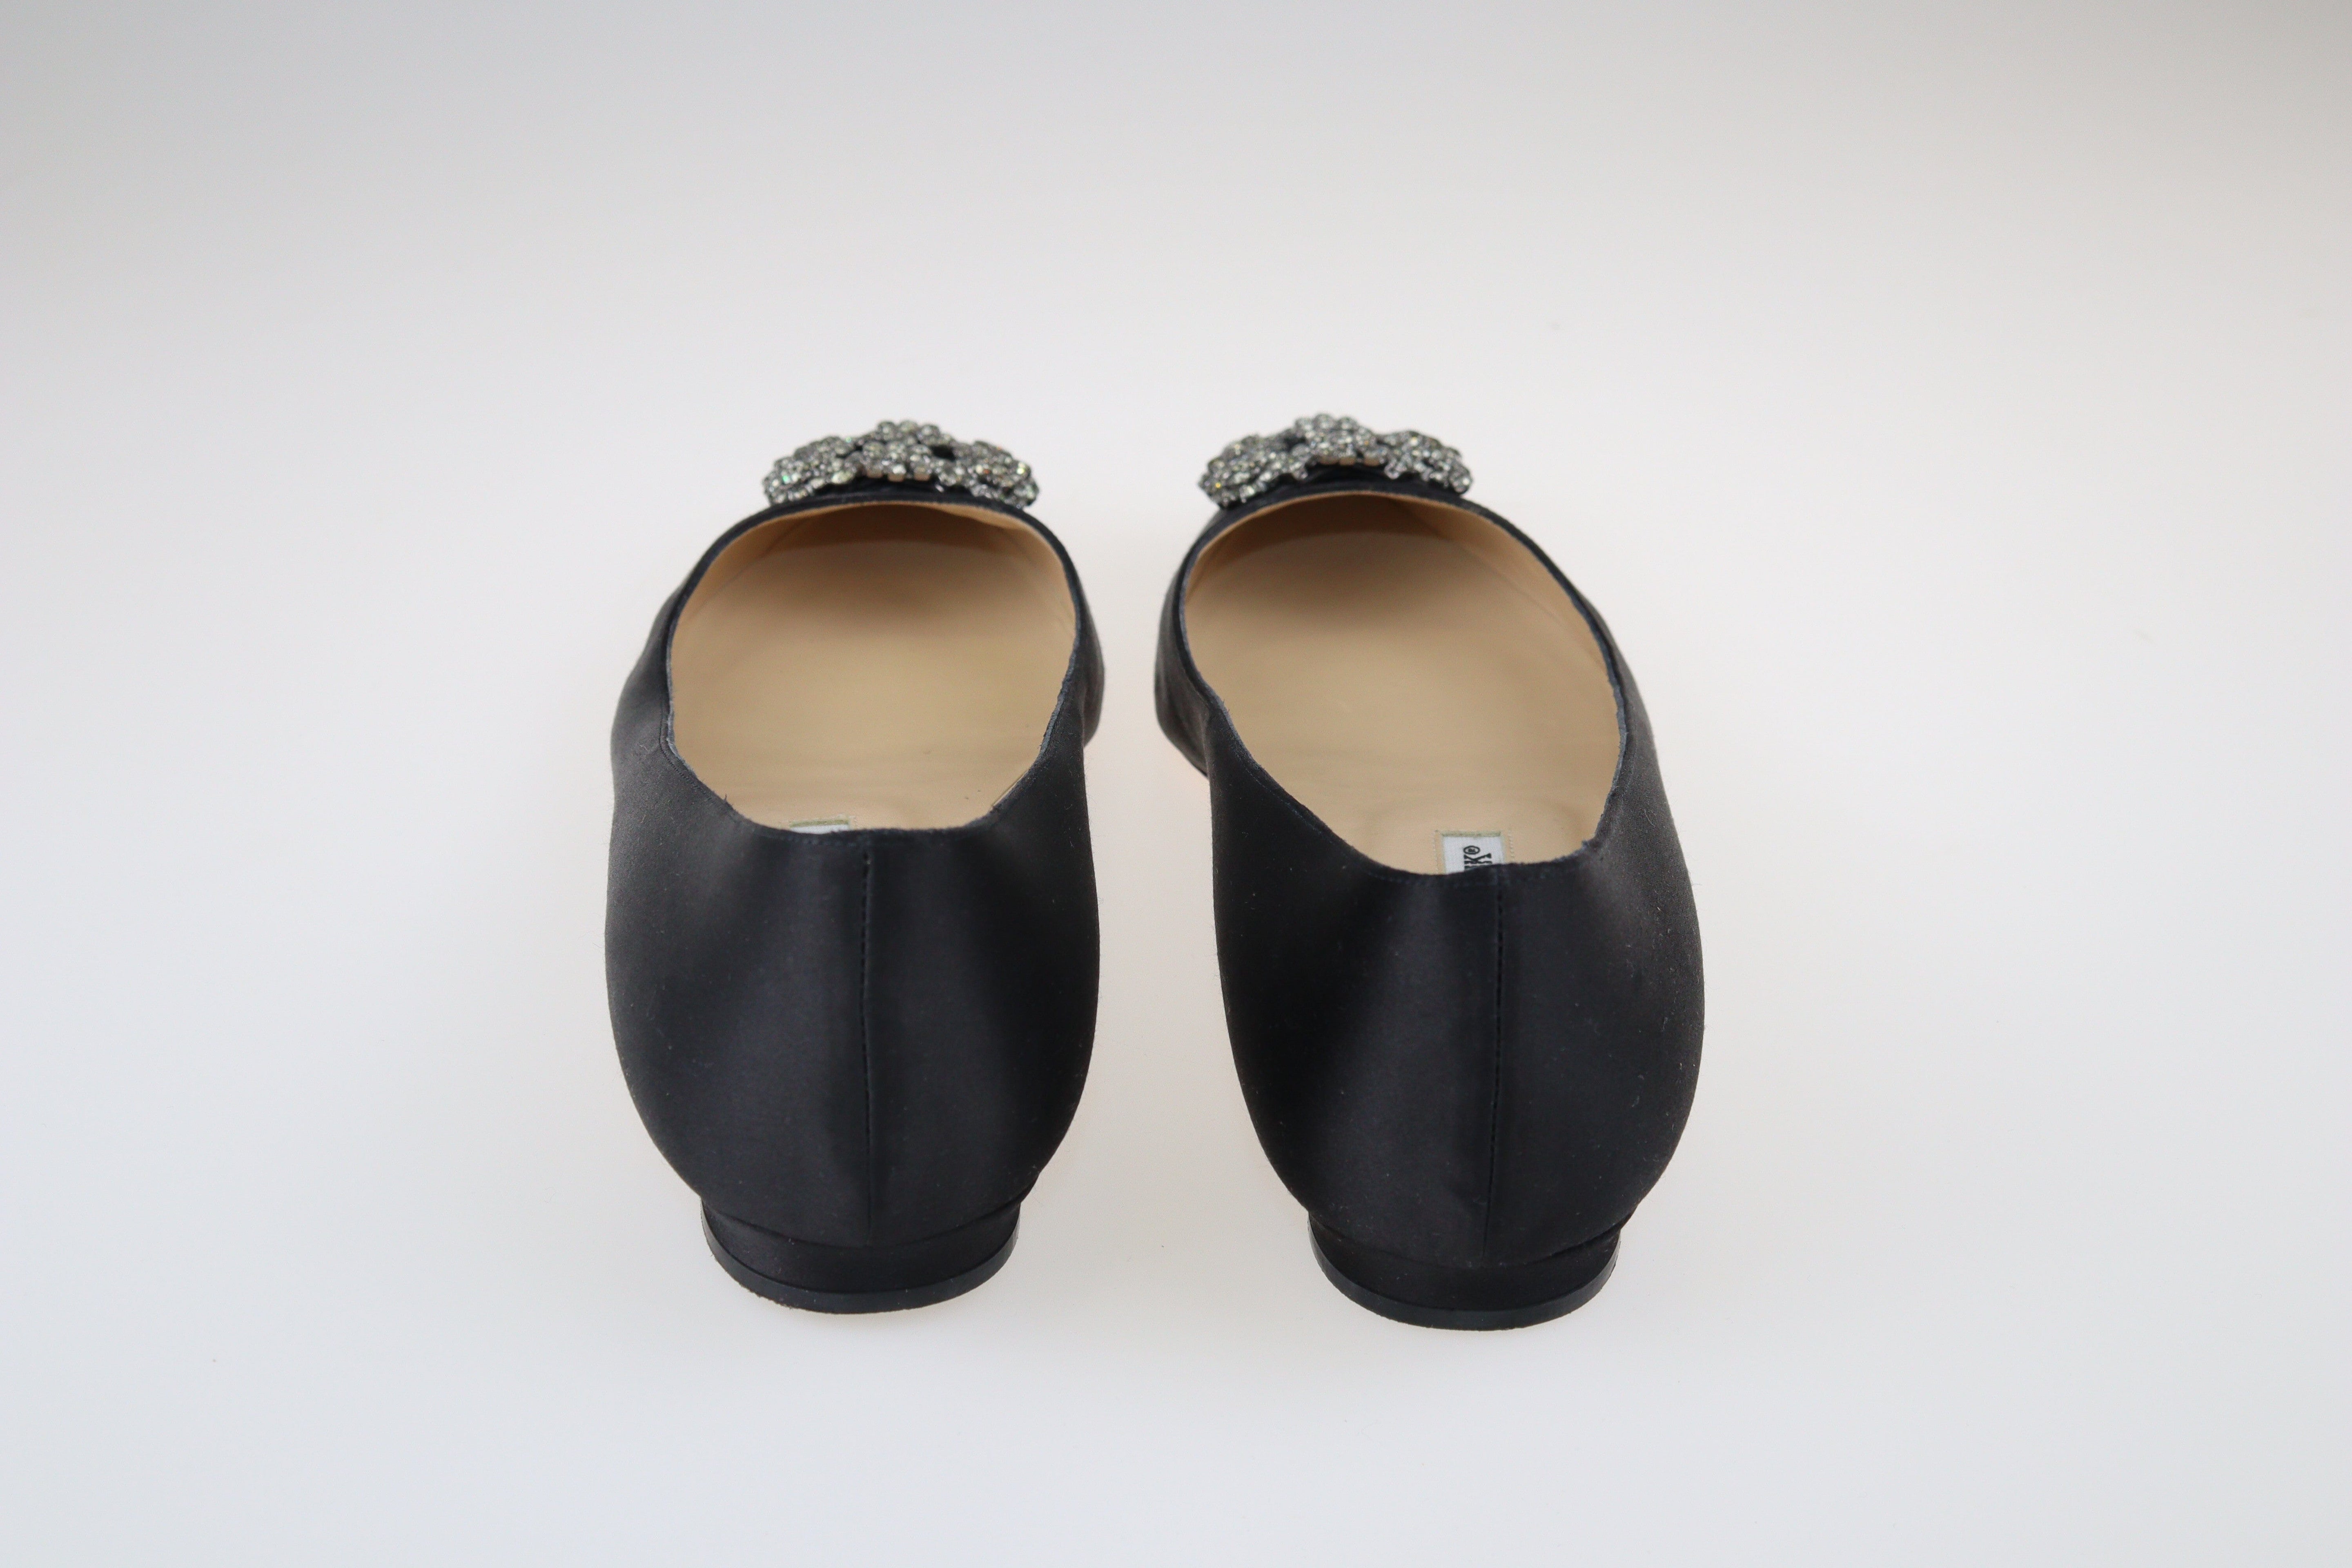 Black Hangisi Ballets Flats Shoes Manolo Blahnik 